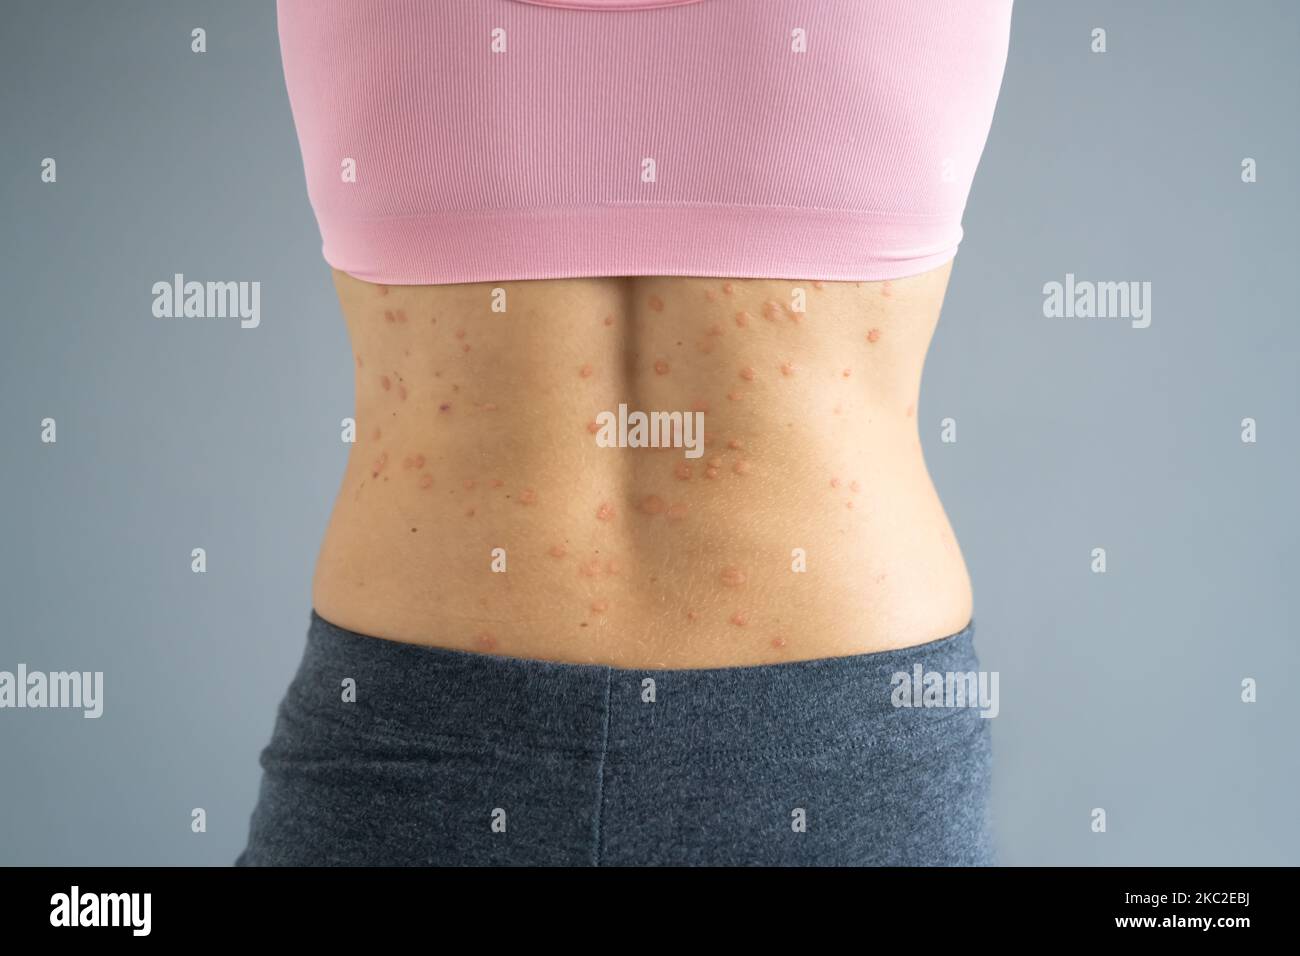 Body Skin With Psoriasis Autoimmune Disease. Medical Illness Stock Photo